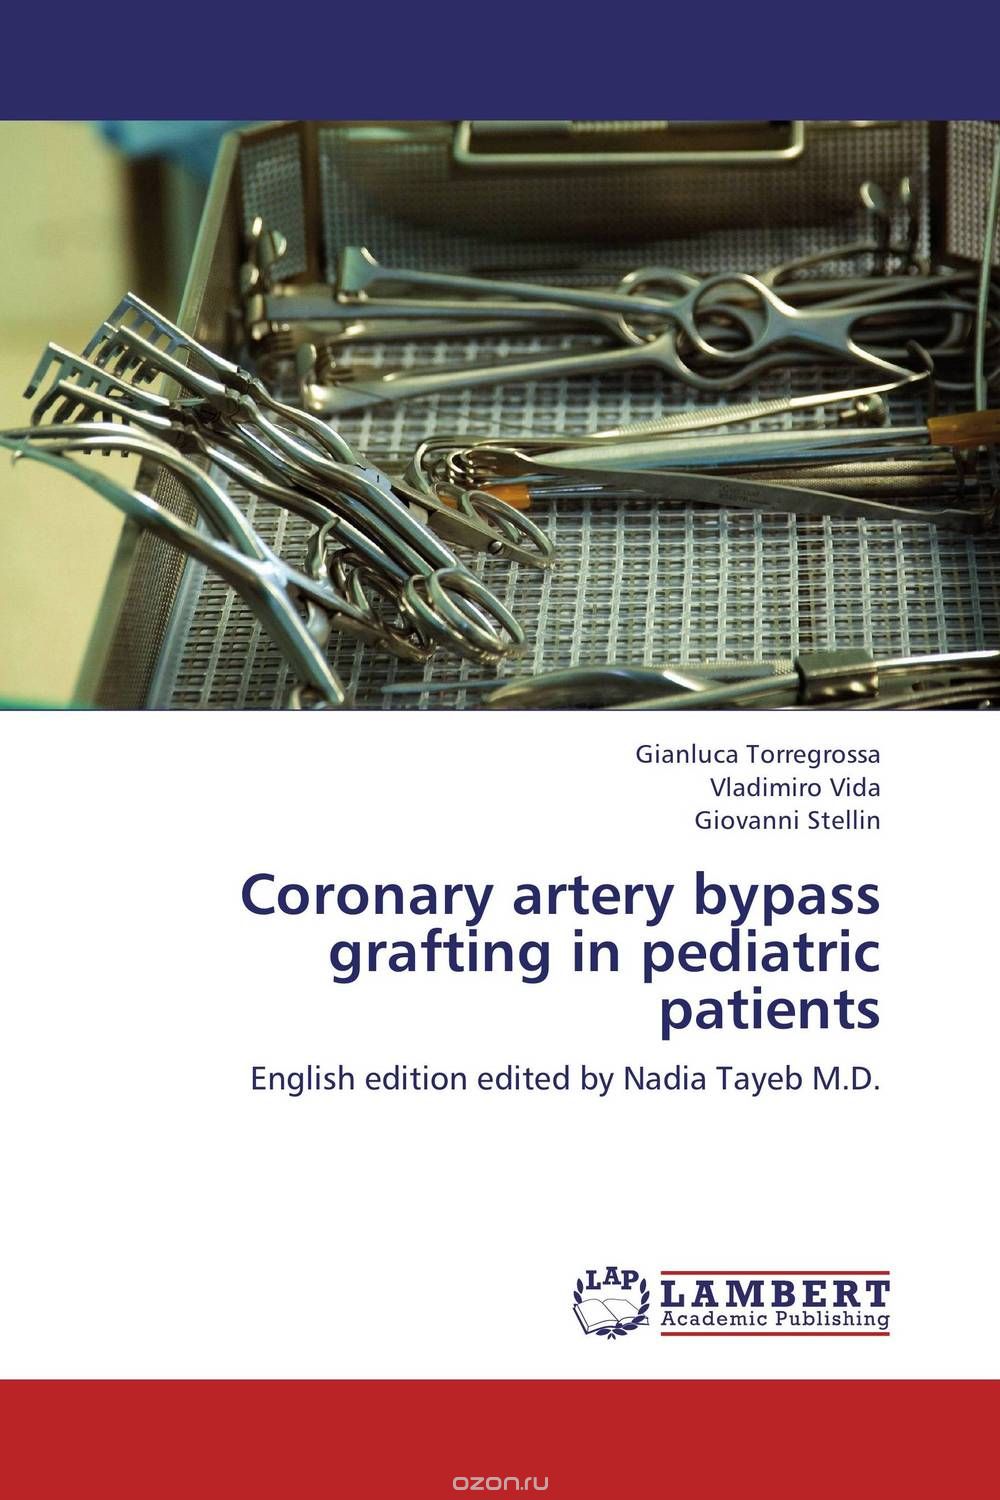 Скачать книгу "Coronary artery bypass grafting in pediatric patients"